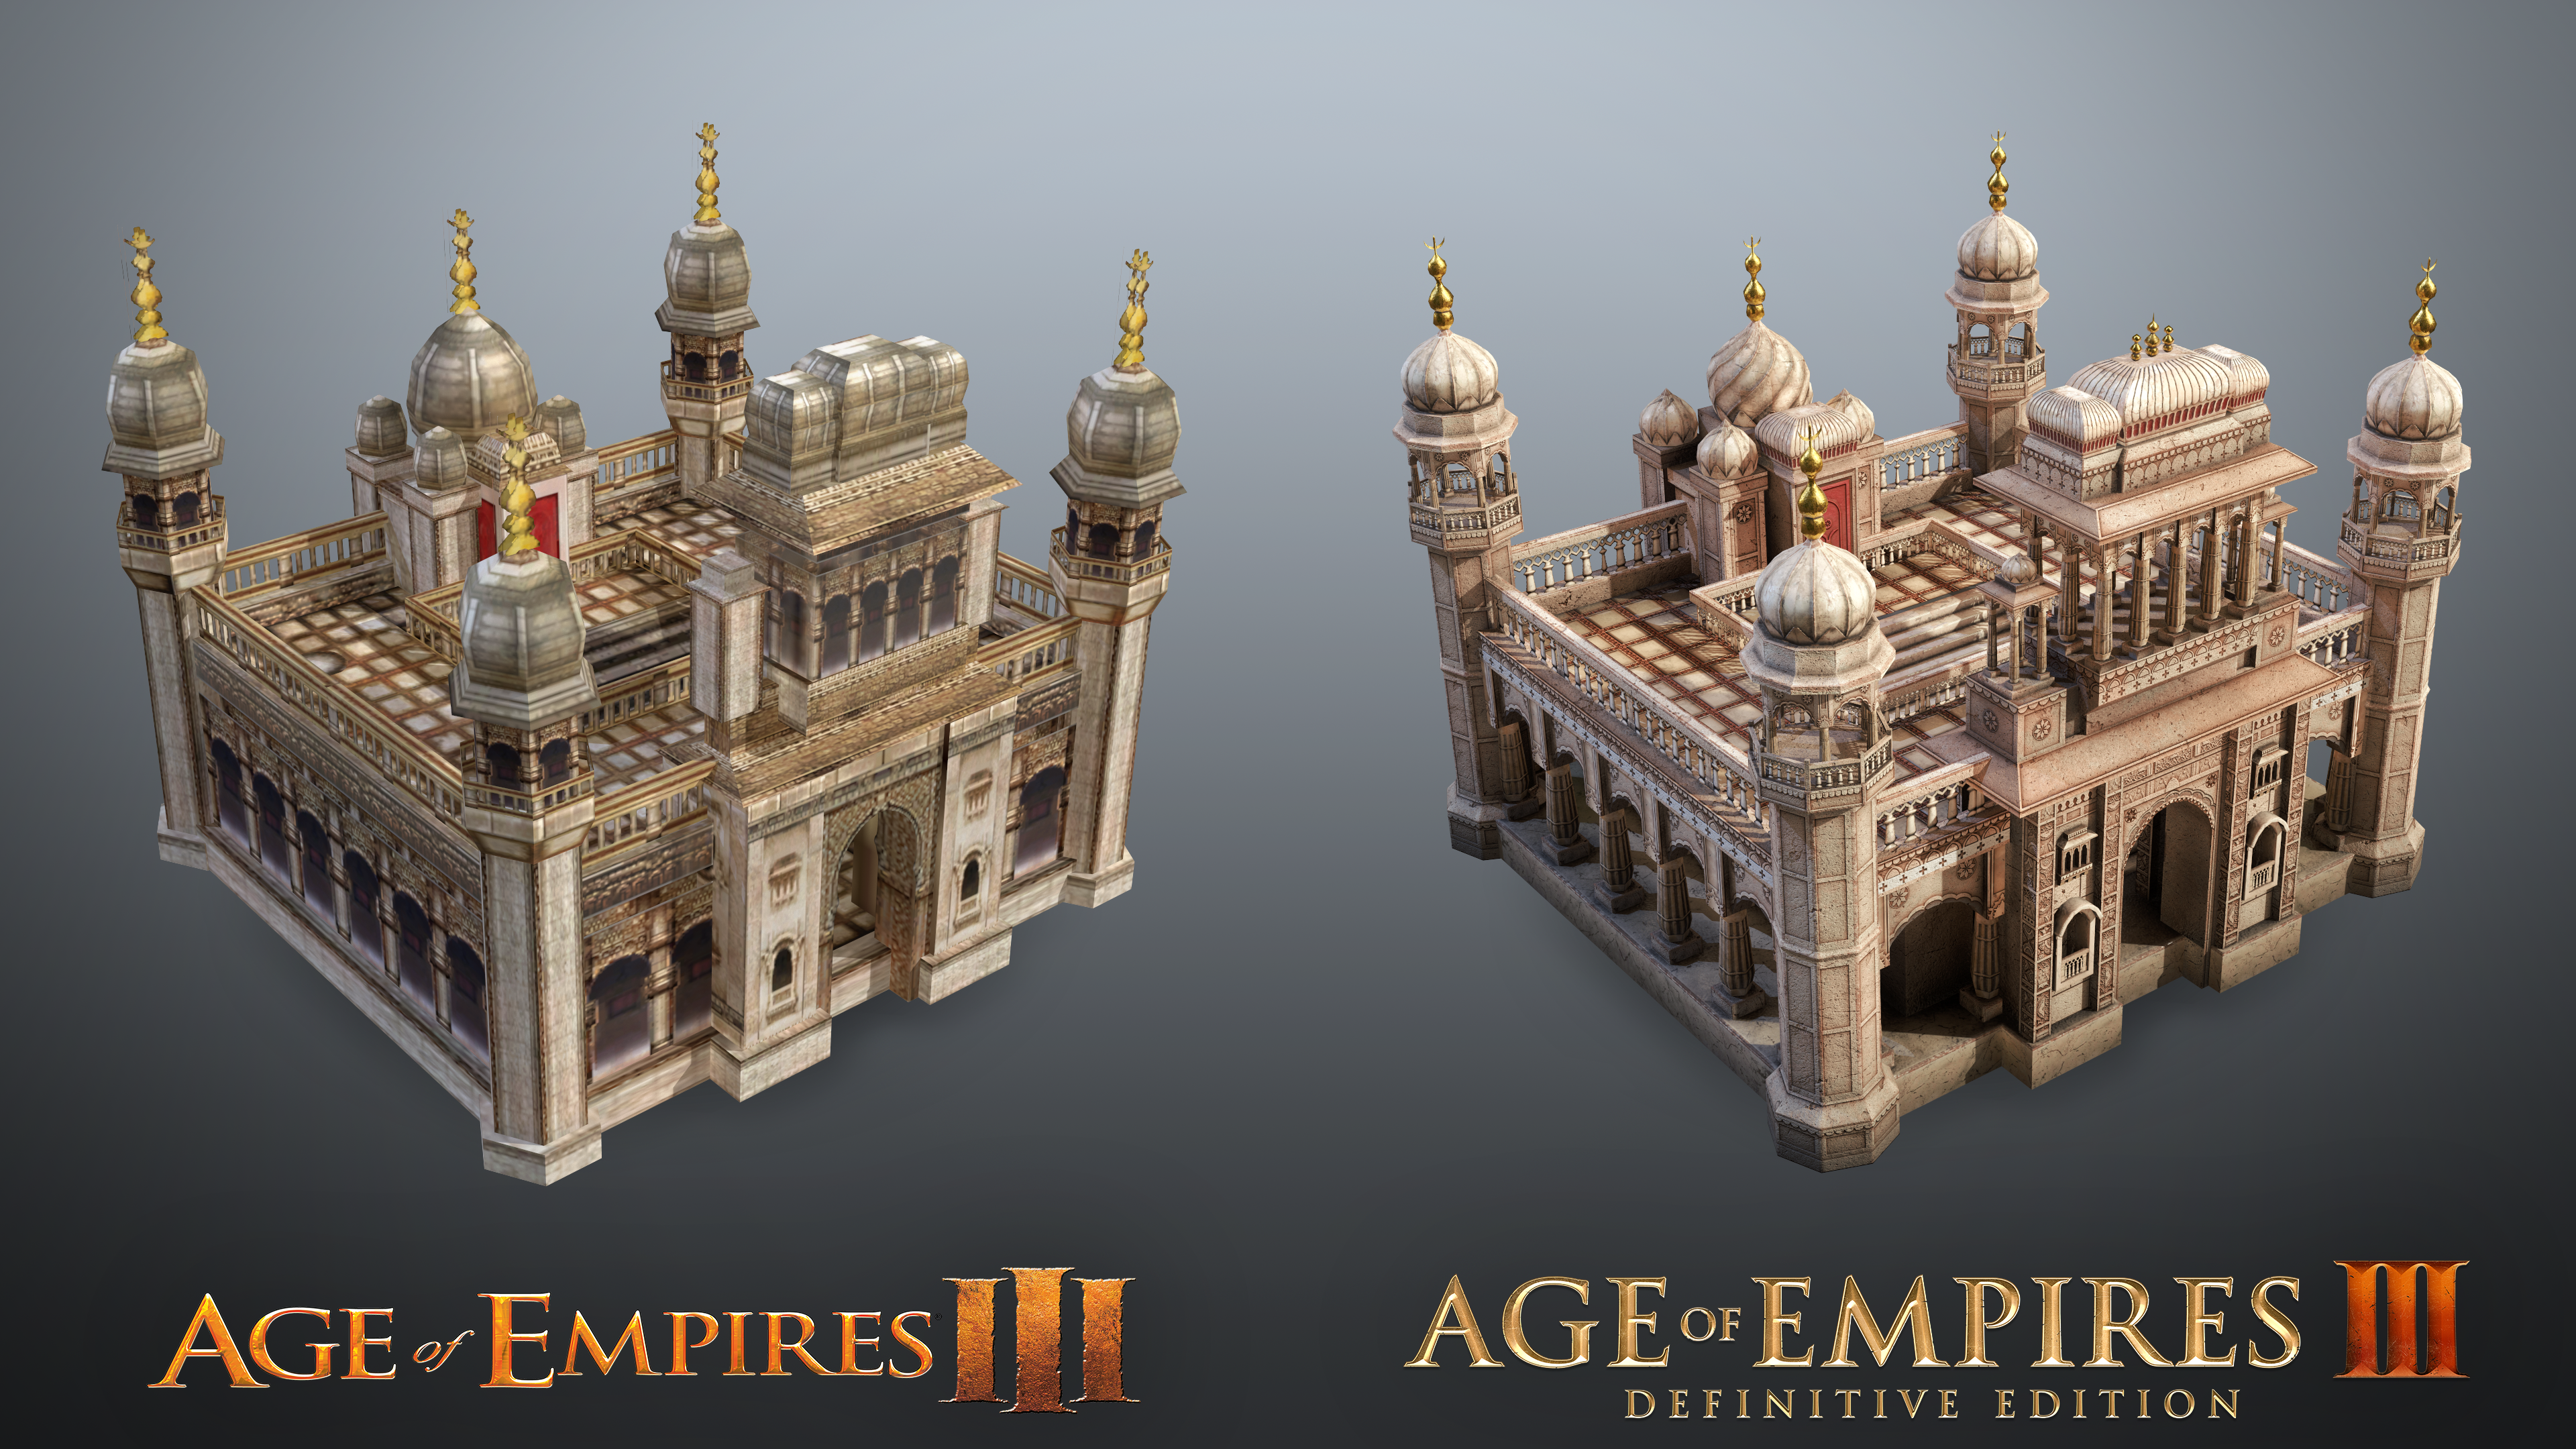 Age of Empires III: Definitive Edition comparison image